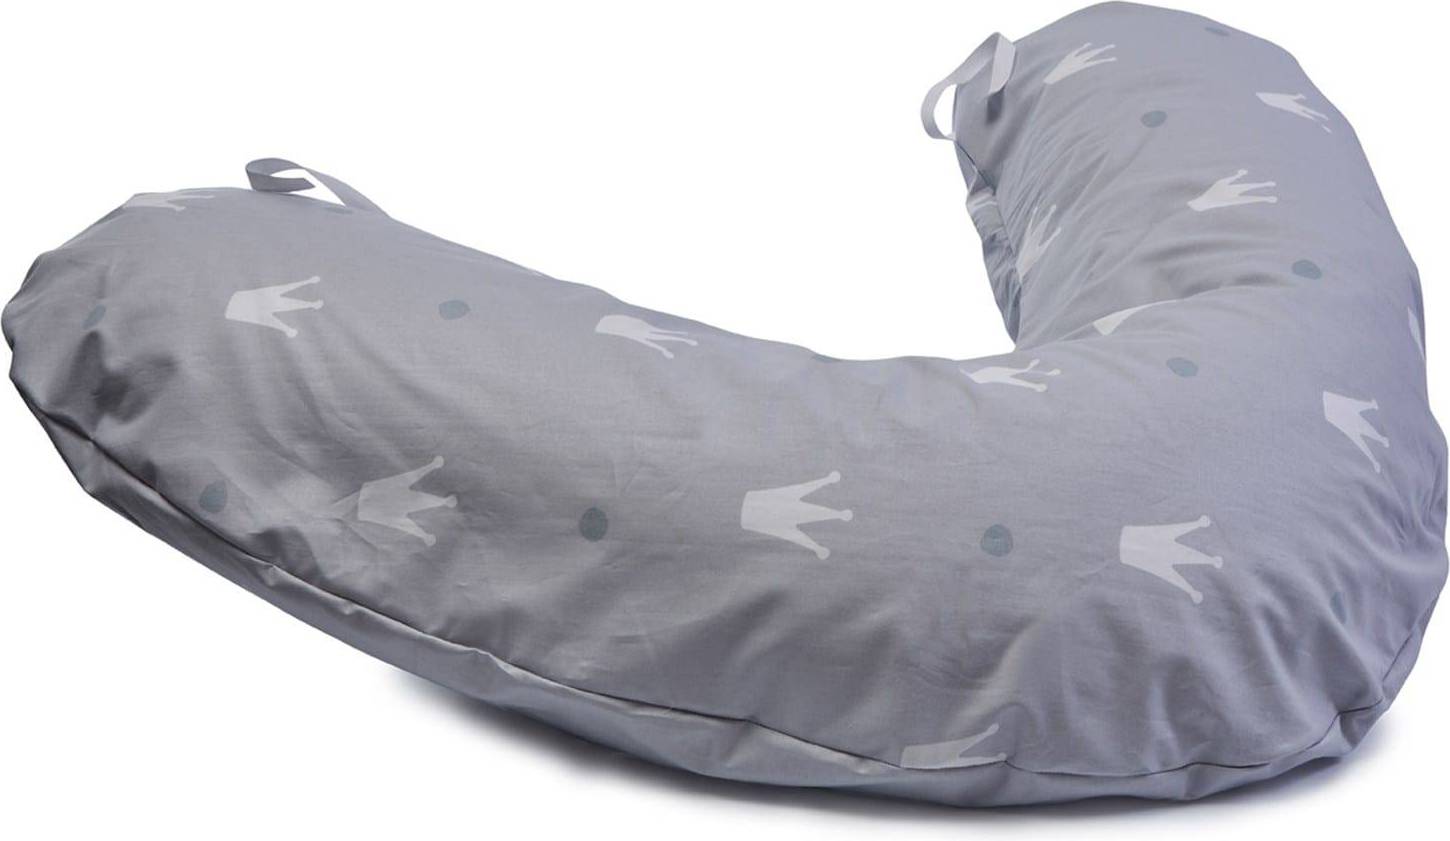  Bild på Ng Baby Nursing Pillow Large Royal Grey amningskudde